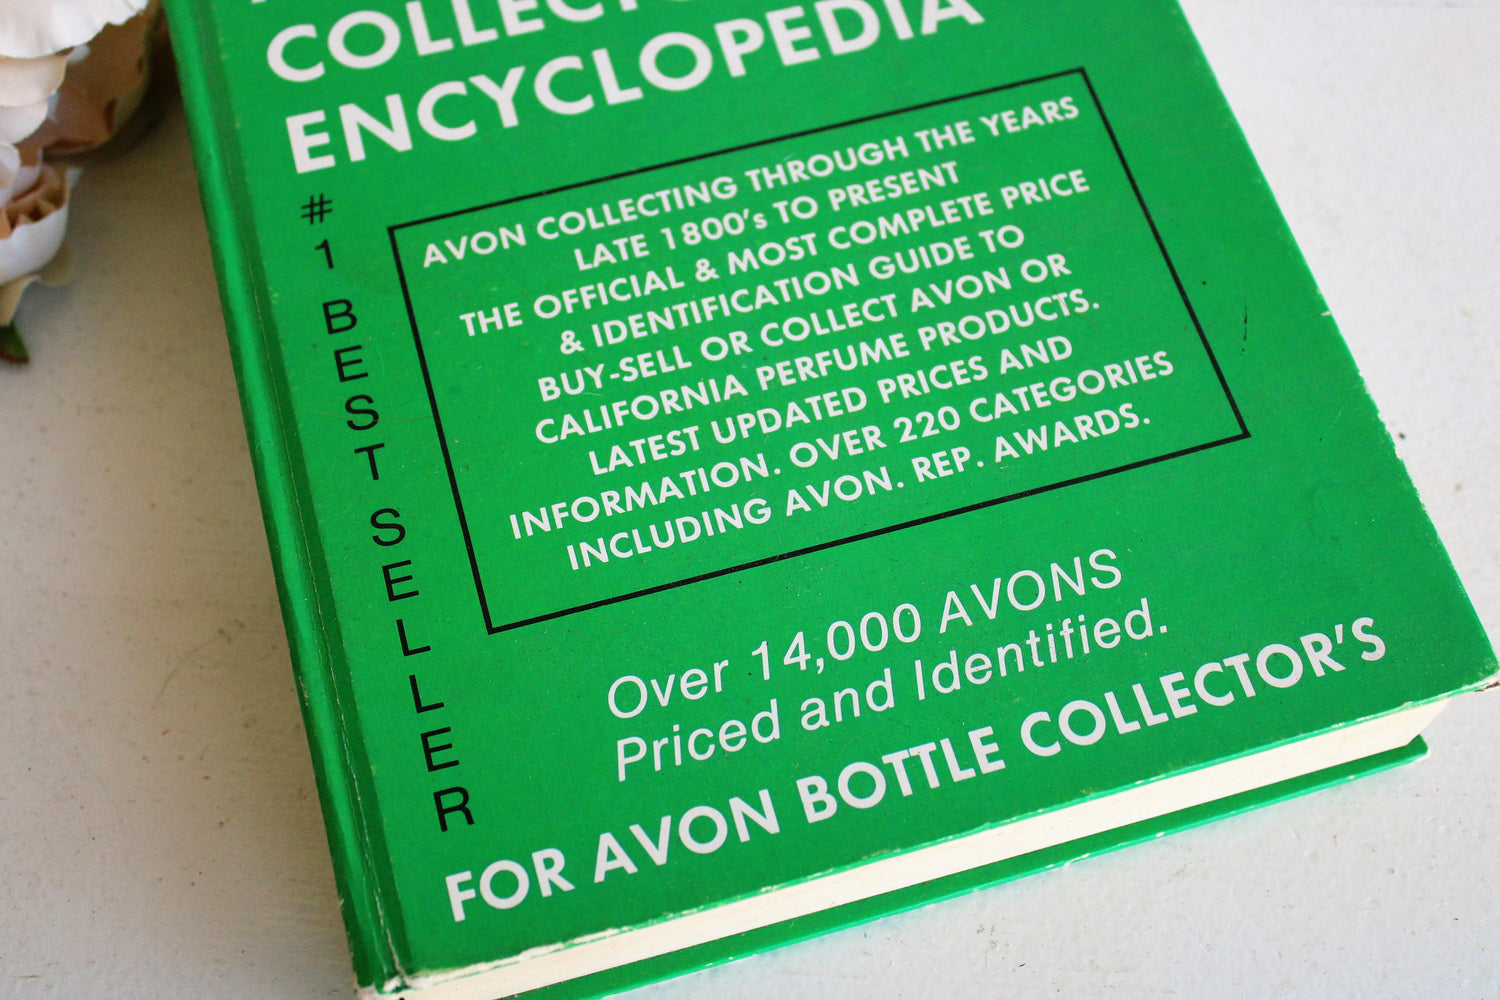 Vintage 1980s Avon Bottle Collector's Encyclopedia